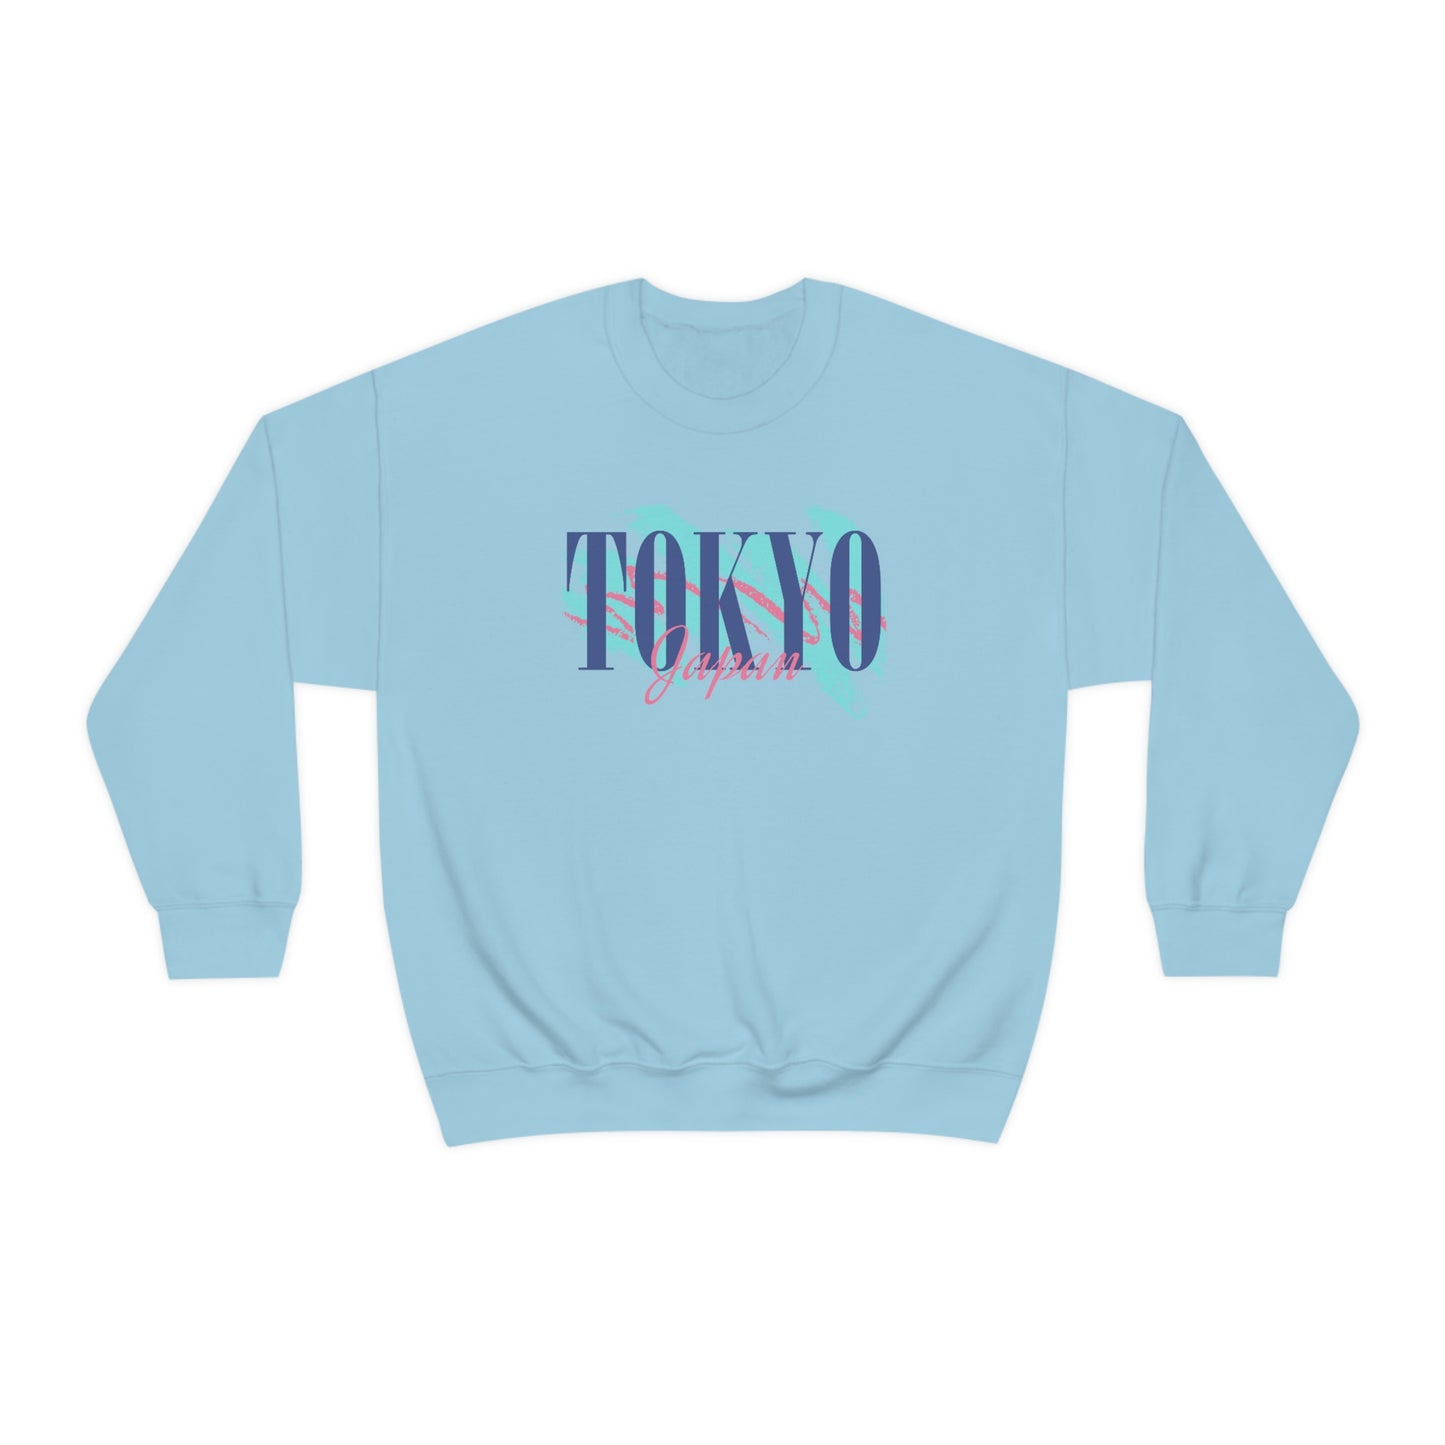 Tokyo Signature Sweatshirt Tokyo Japan Crewneck Retro Style Sweatshirt Vintage Inspired Sweater